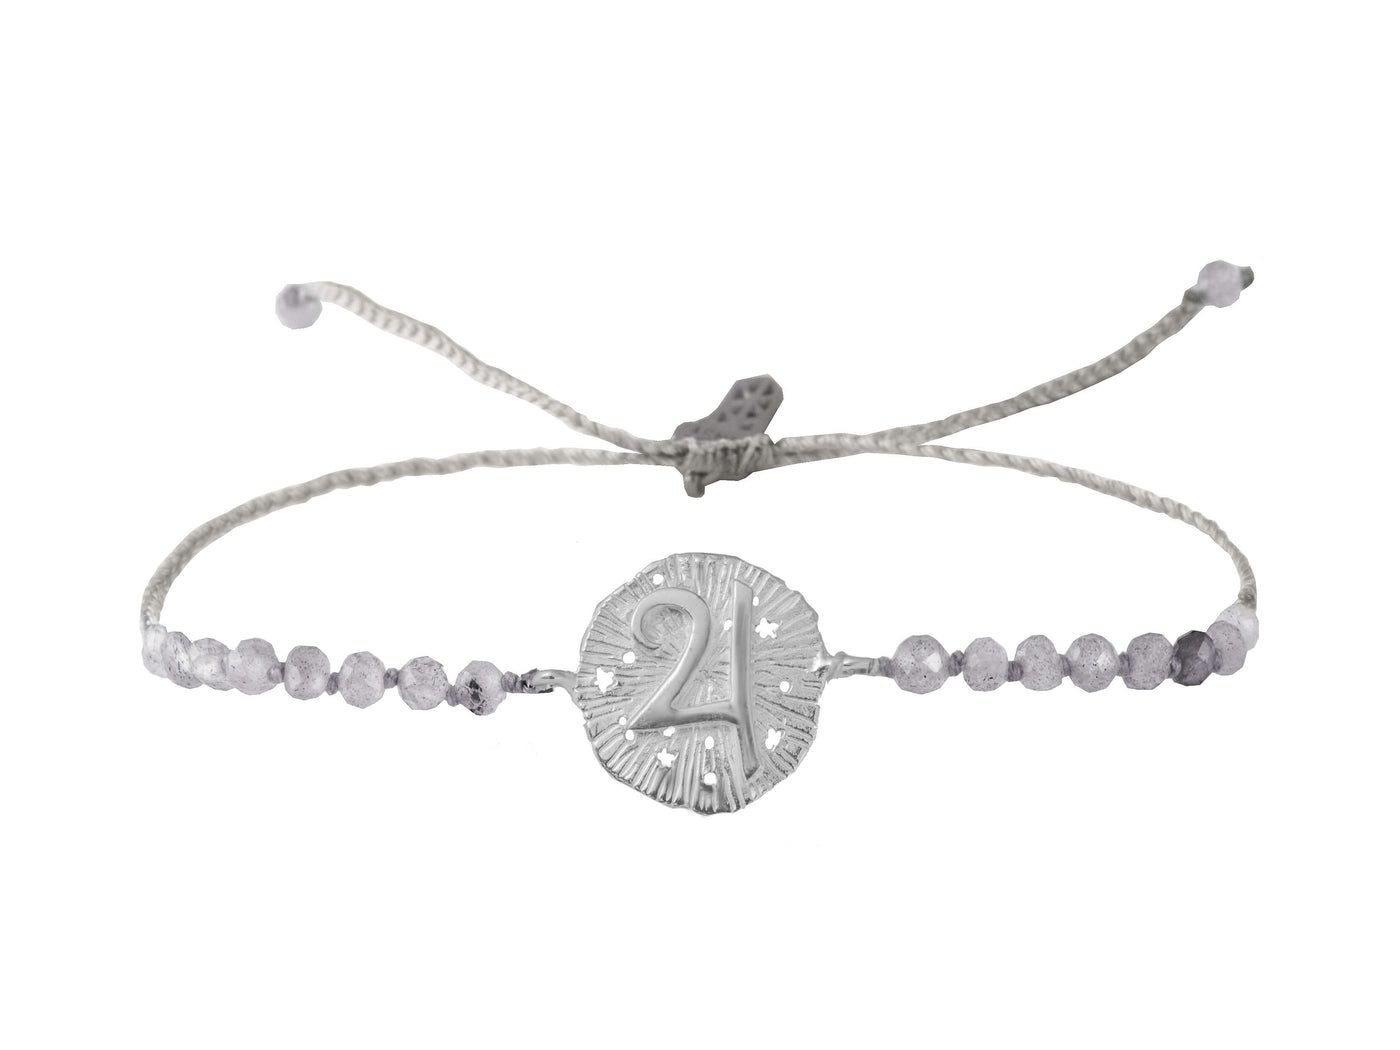 Jupiter medallion amulet bracelet with beads. Silver